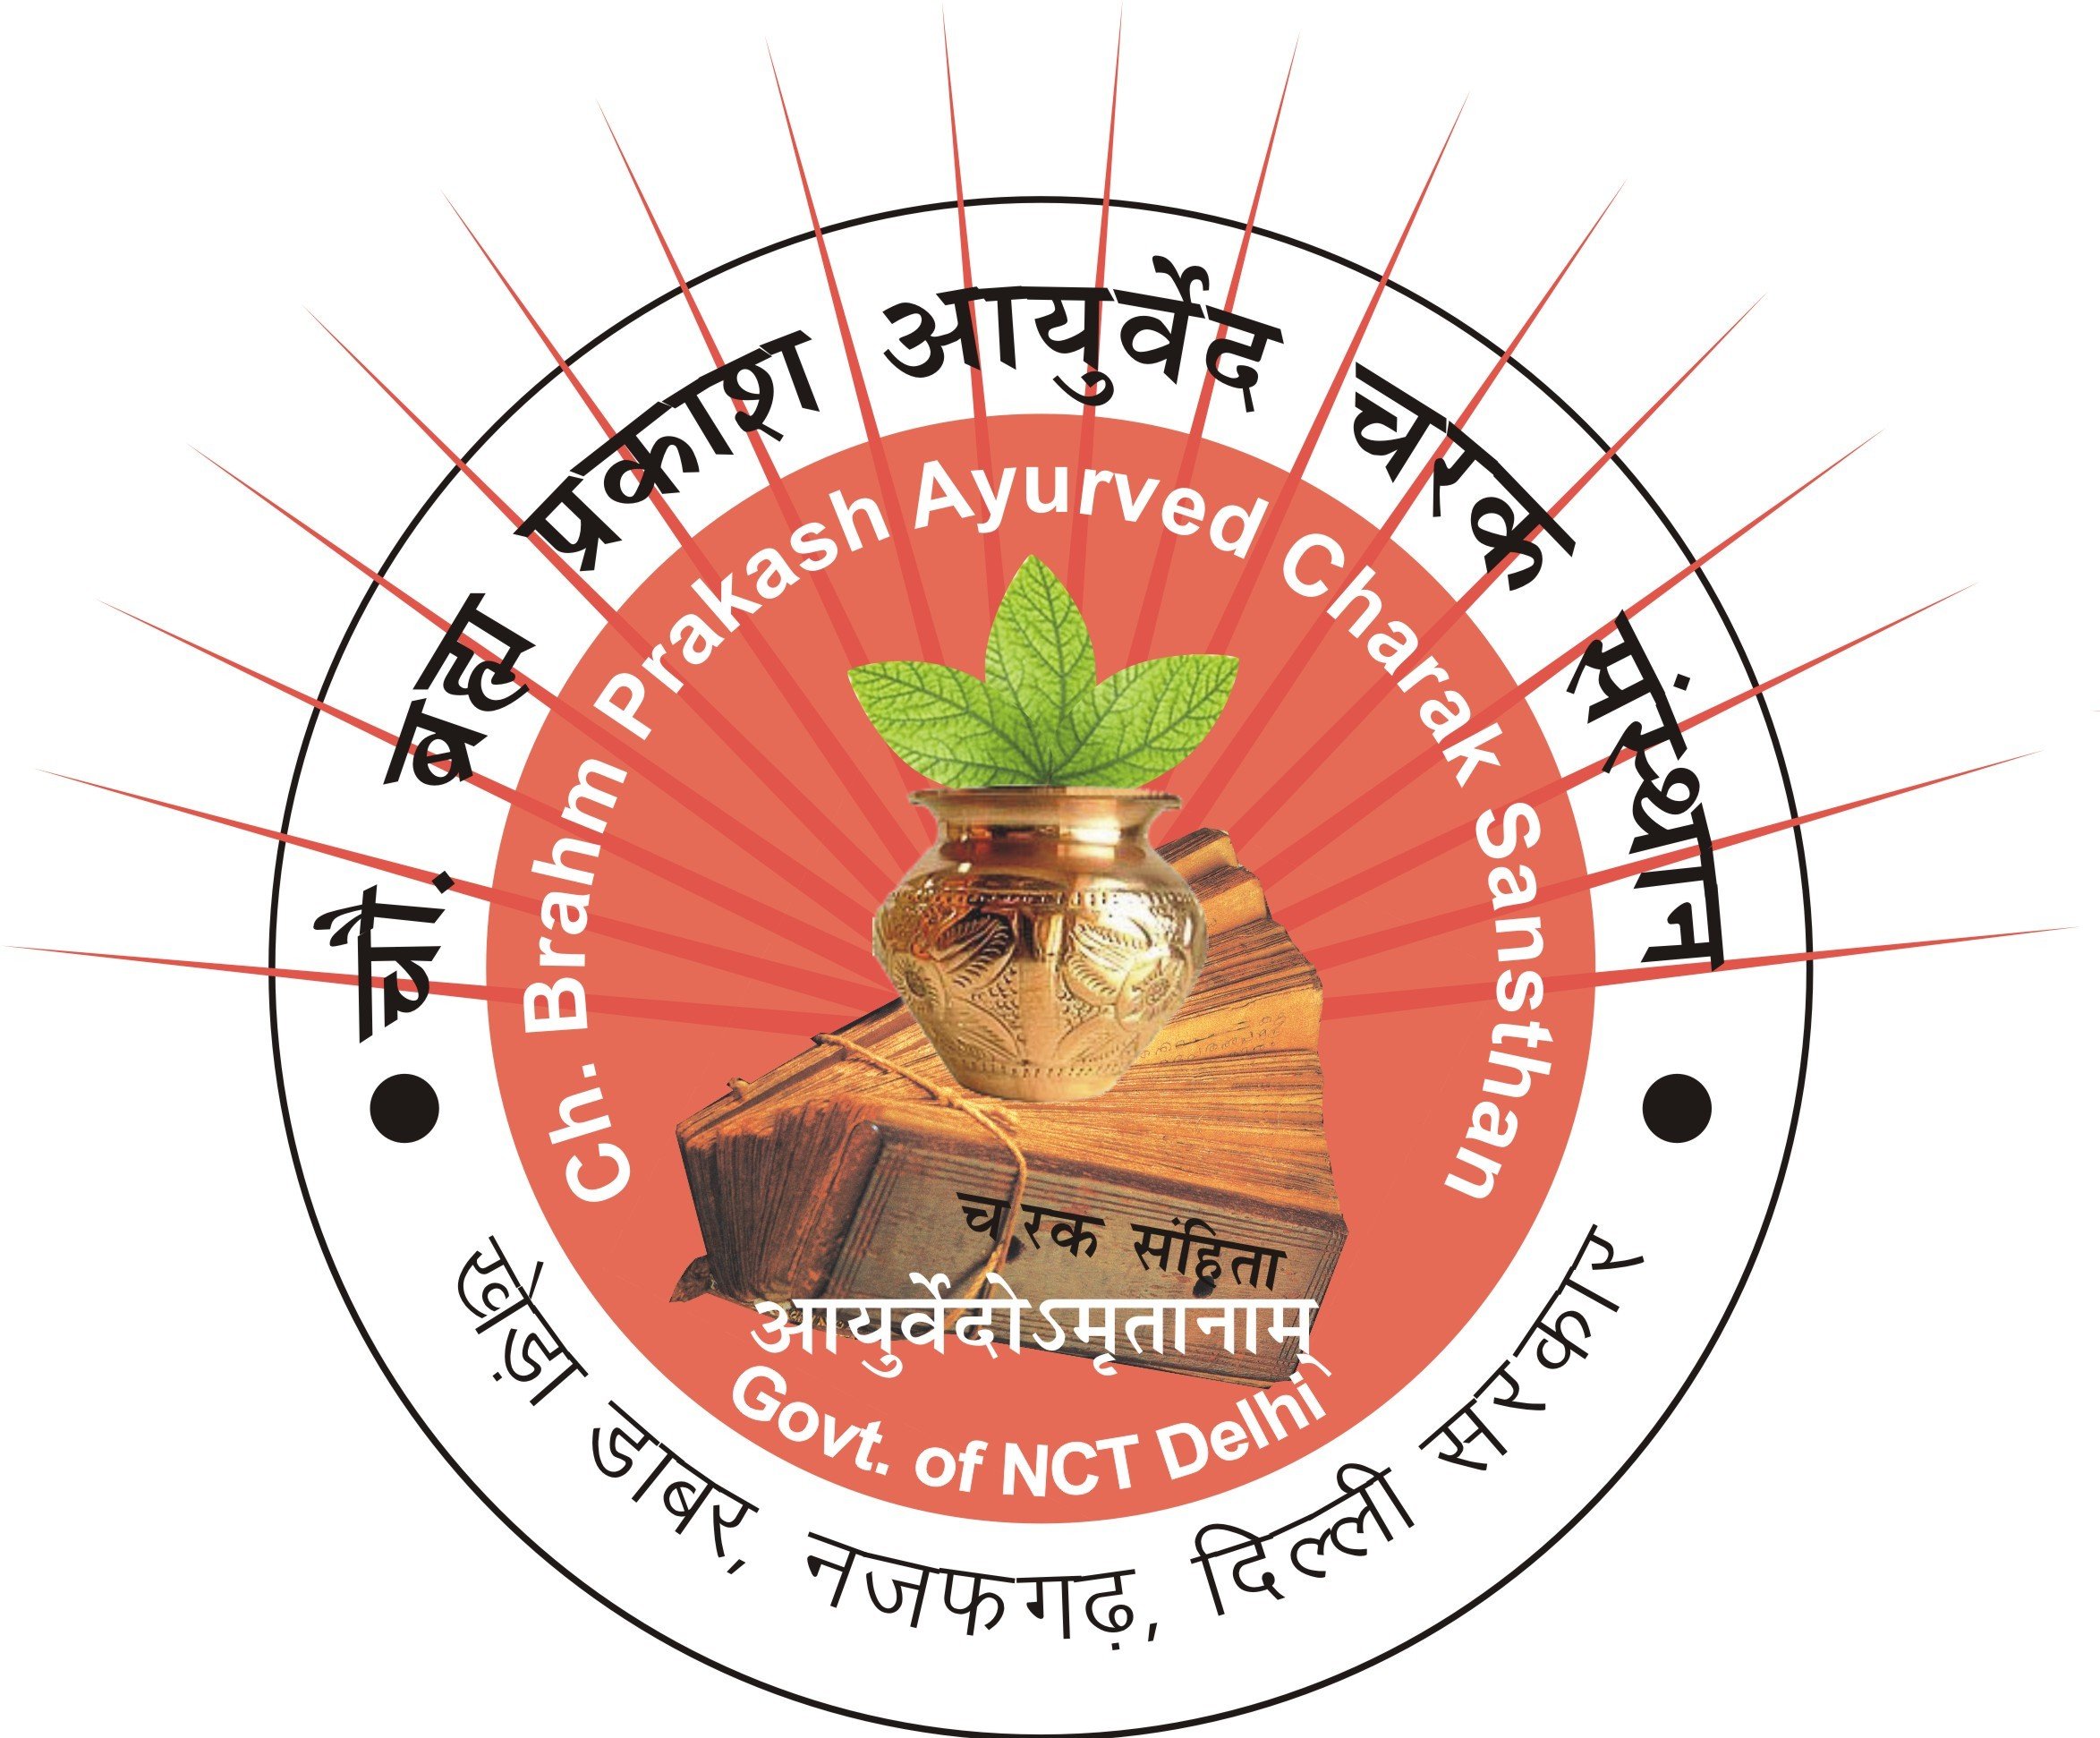 Ch. Brahm Prakash Ayurved Charak Sansthan, village Khera Dabar, Najafgarh, Delhi-73 is an Autonomous Institution under Govt. of NCT of Delhi